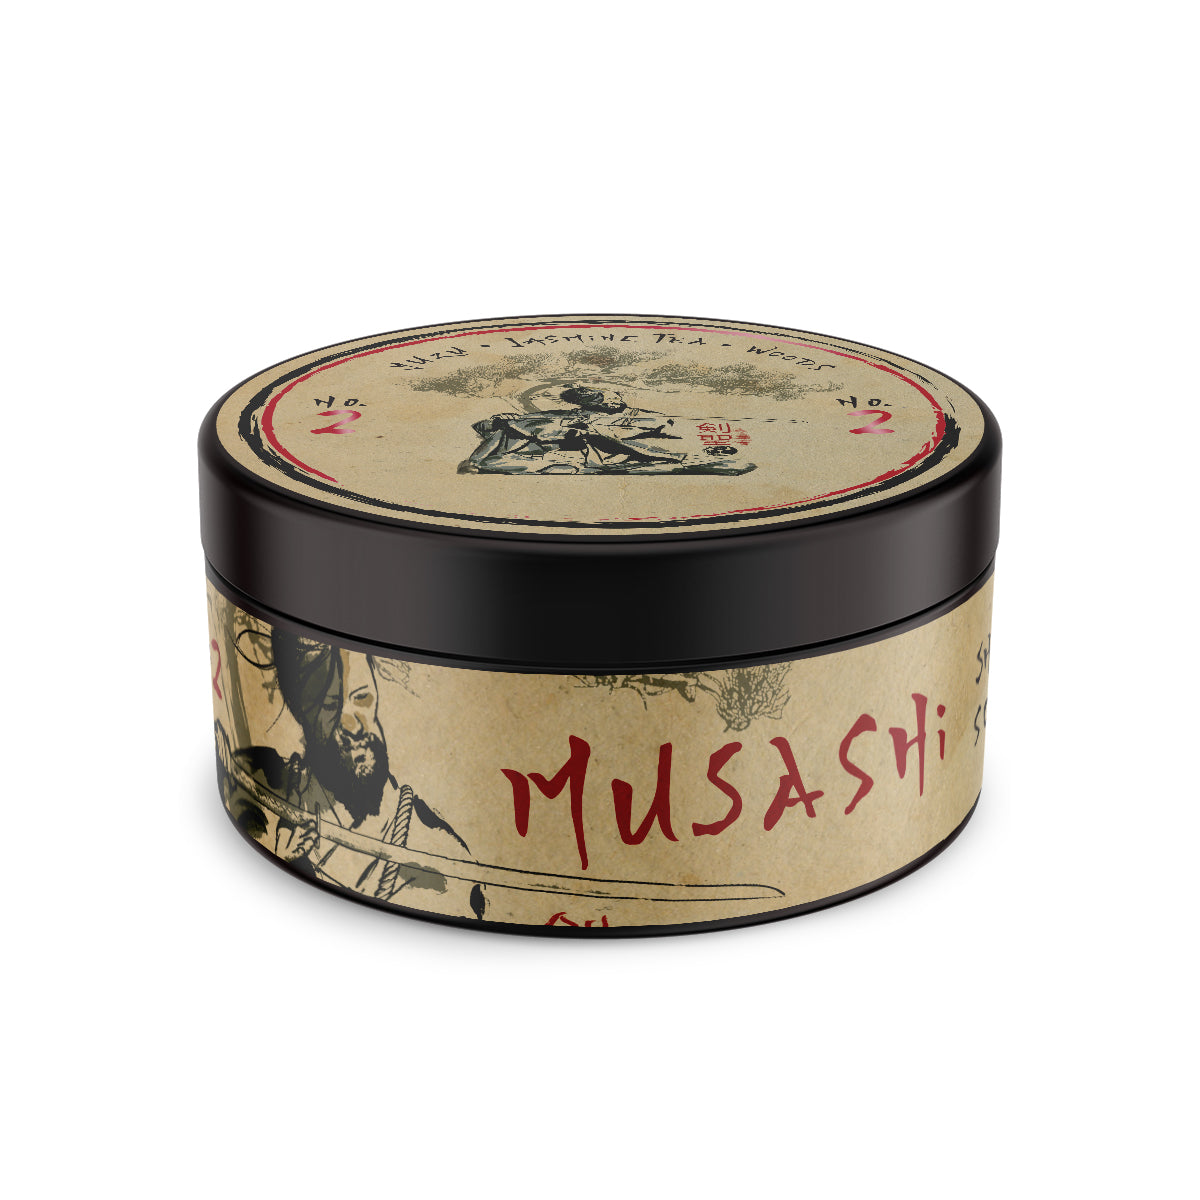 Musashi Origins Series Shave Soap